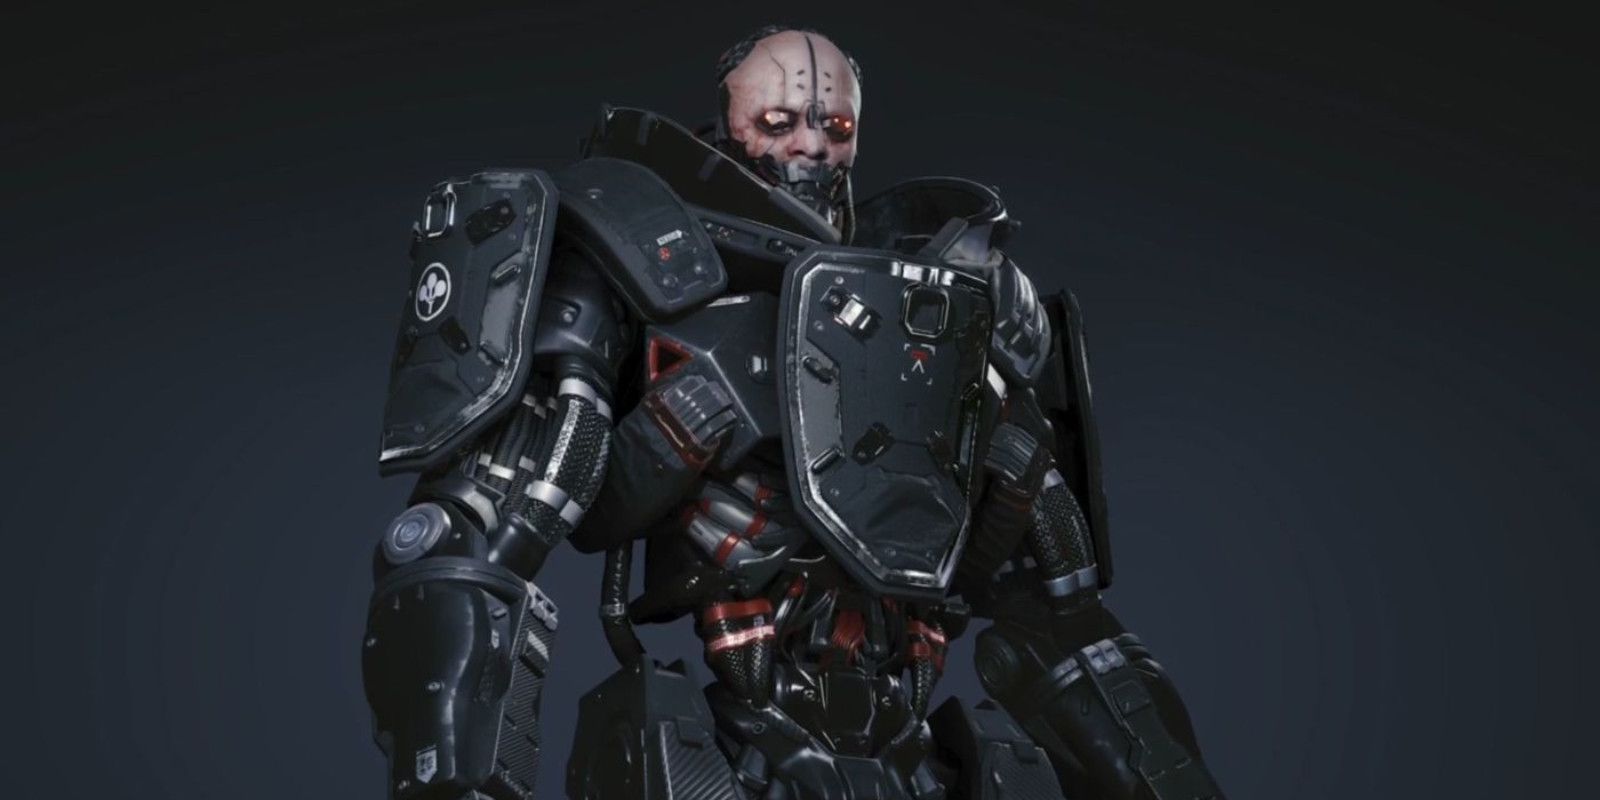 Adam Smasher's character model in Cyberpunk 2077.